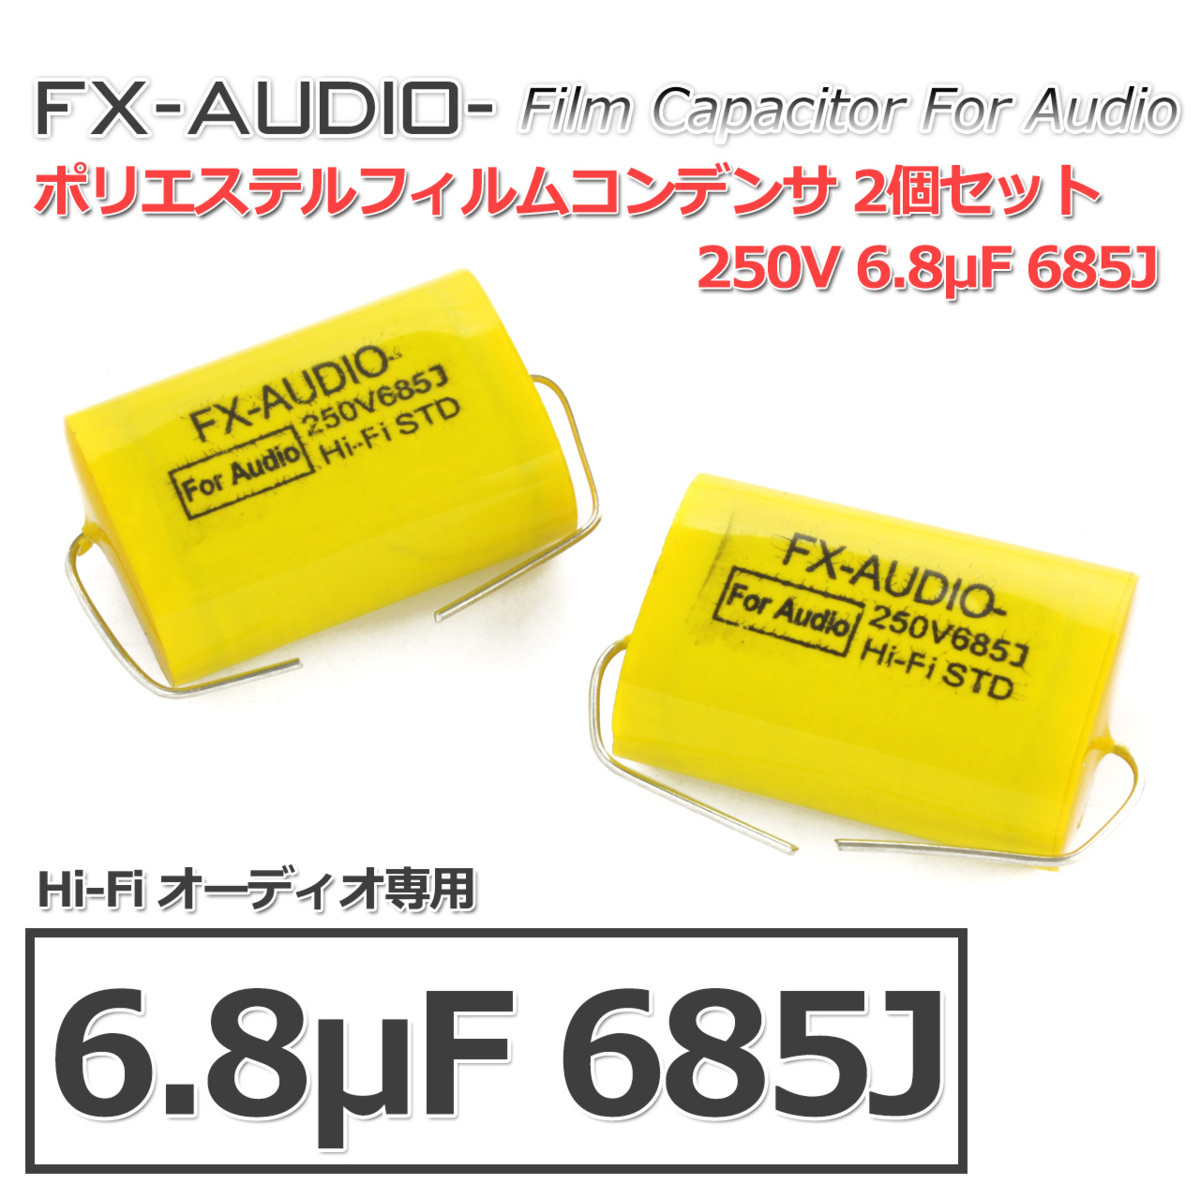 FX-AUDIO- 限定生産製品専用オーディオ用ポリエステルフィルムコンデンサ 250V 6.8μF 685J 2個セット ツイーター用・ネットワーク用にもの画像1